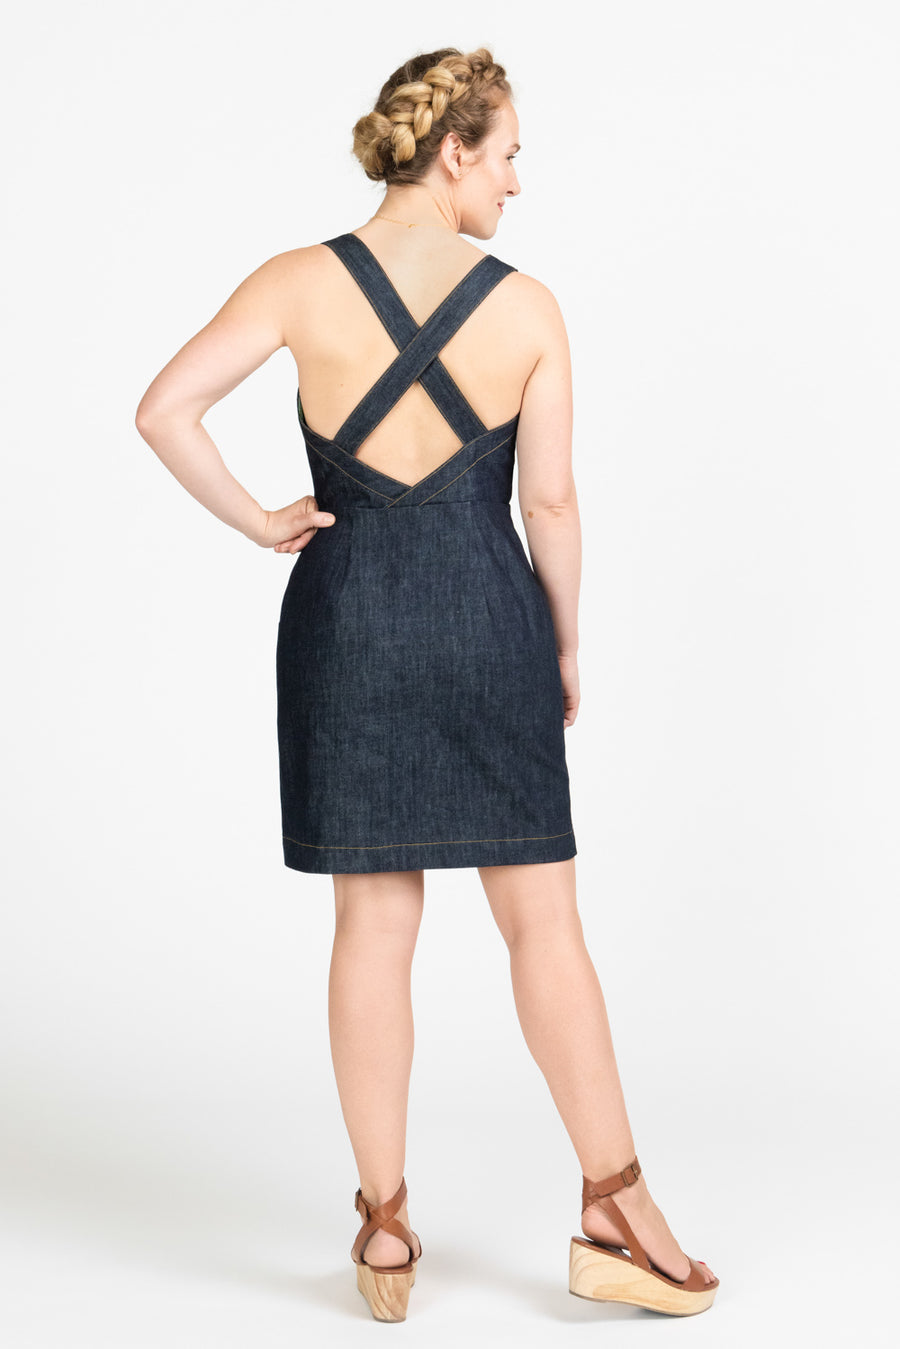 Bras for low cut dresses — Blog — Poplin Style Direction, personal arte  brás fotos 